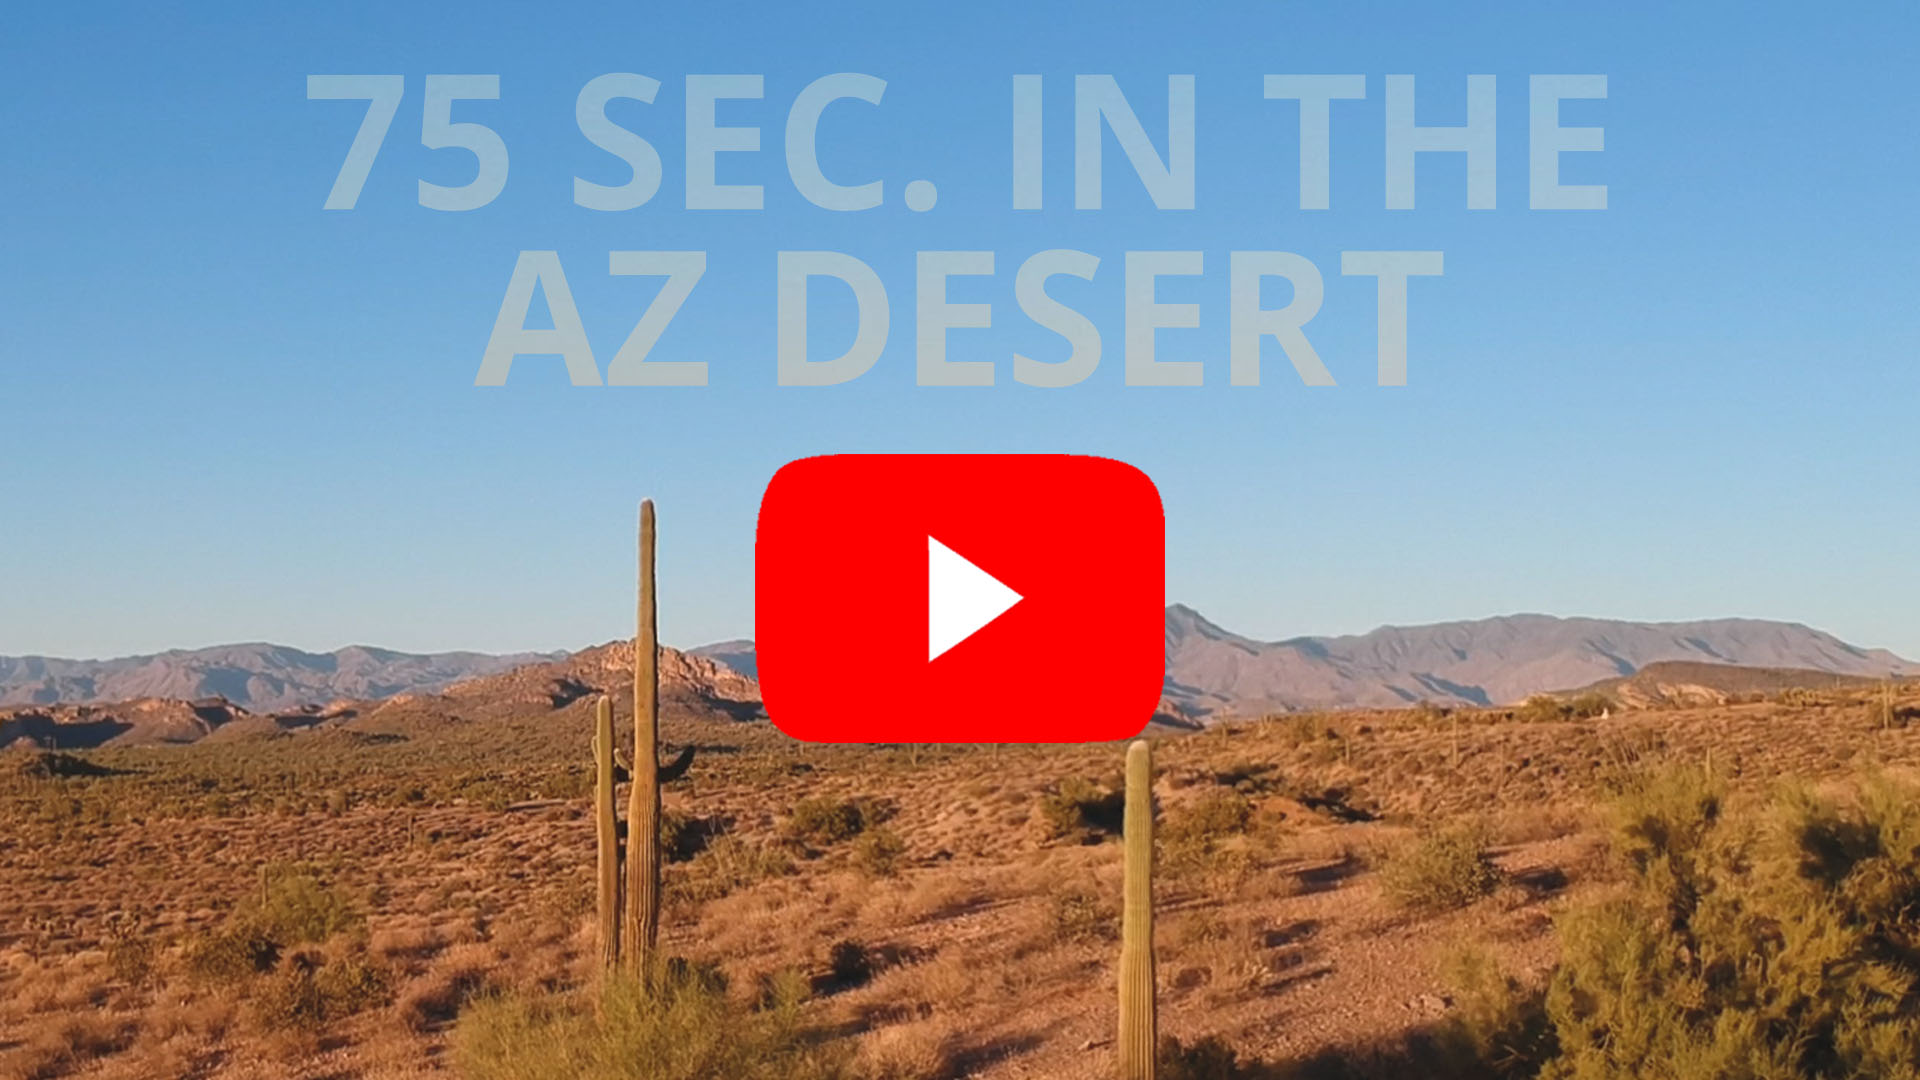 AZ Desert cover - Saguaro cactus and mountains in Phoenix Valley